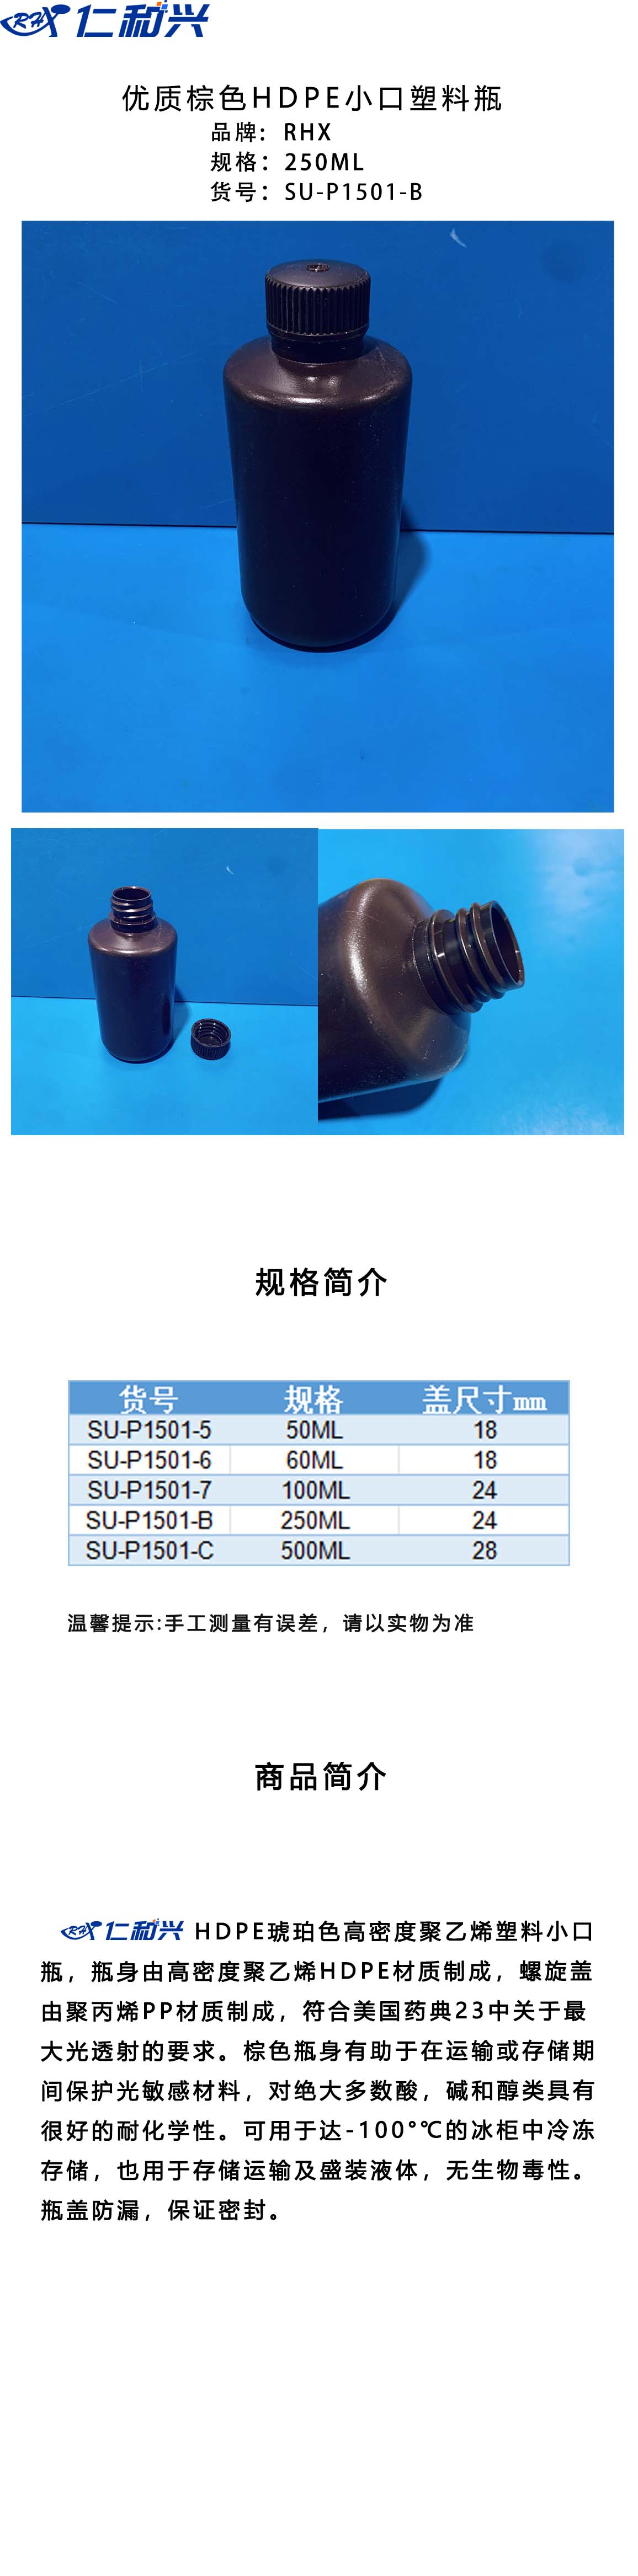 SU-P1501-B 棕色HDPE 小口塑料瓶 长图模板.jpg